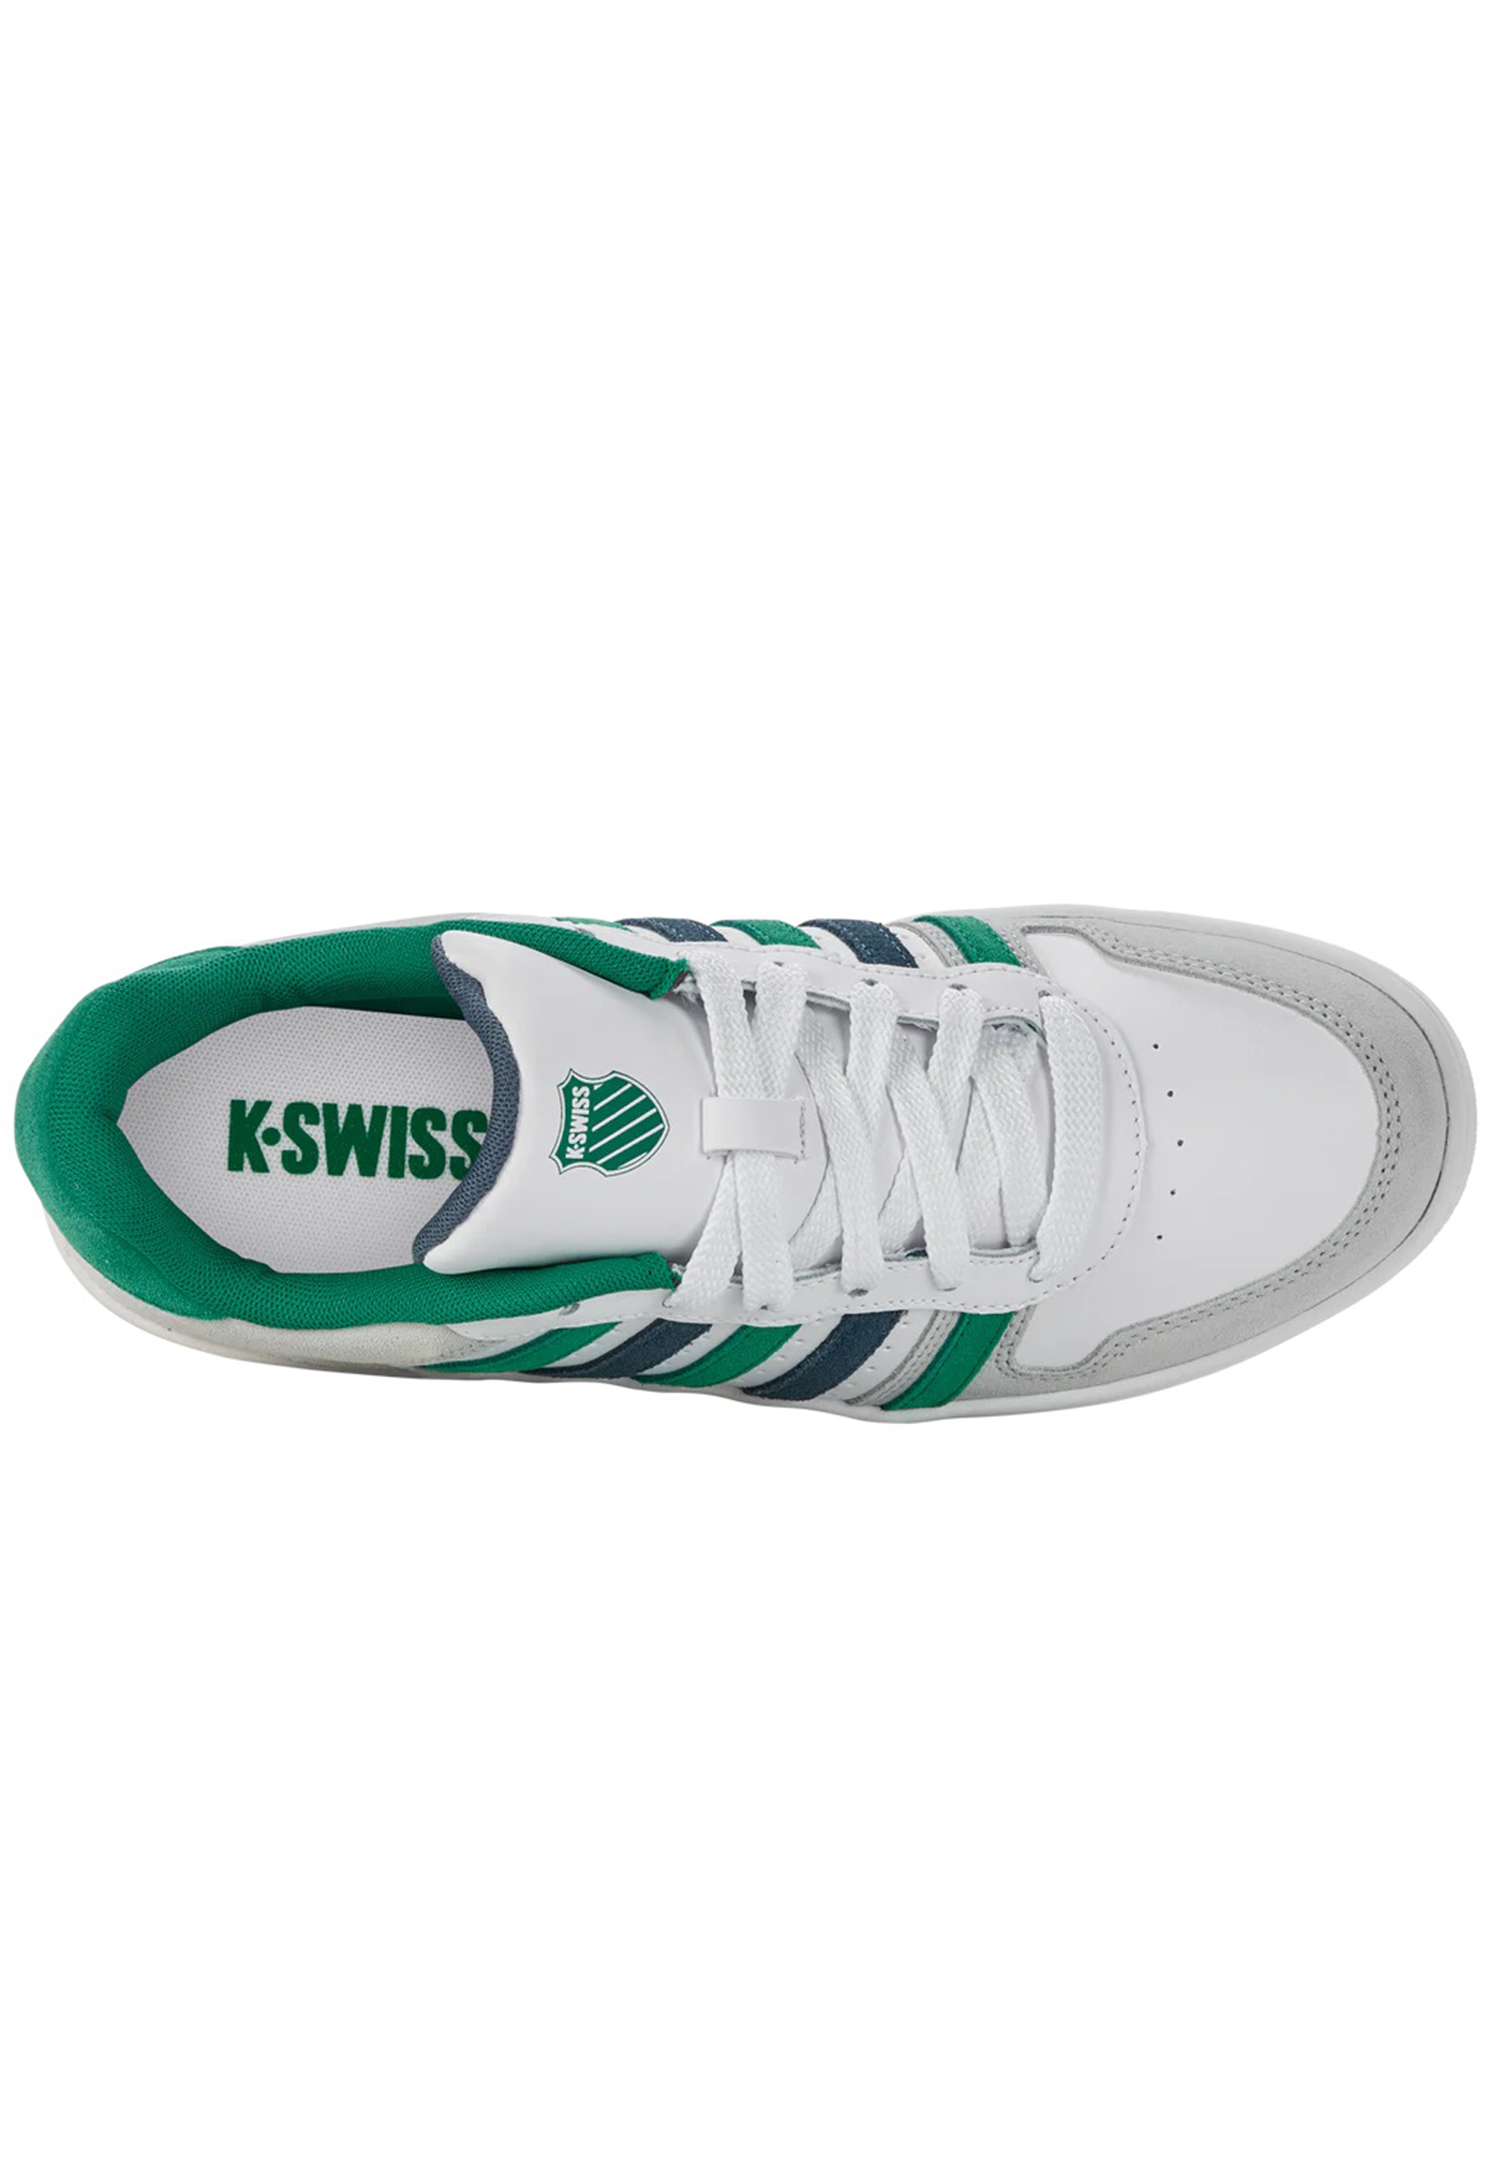 K-SWISS Court Palisades Herren Sneaker Sportschuhe 06931-972-M mehrfarbig